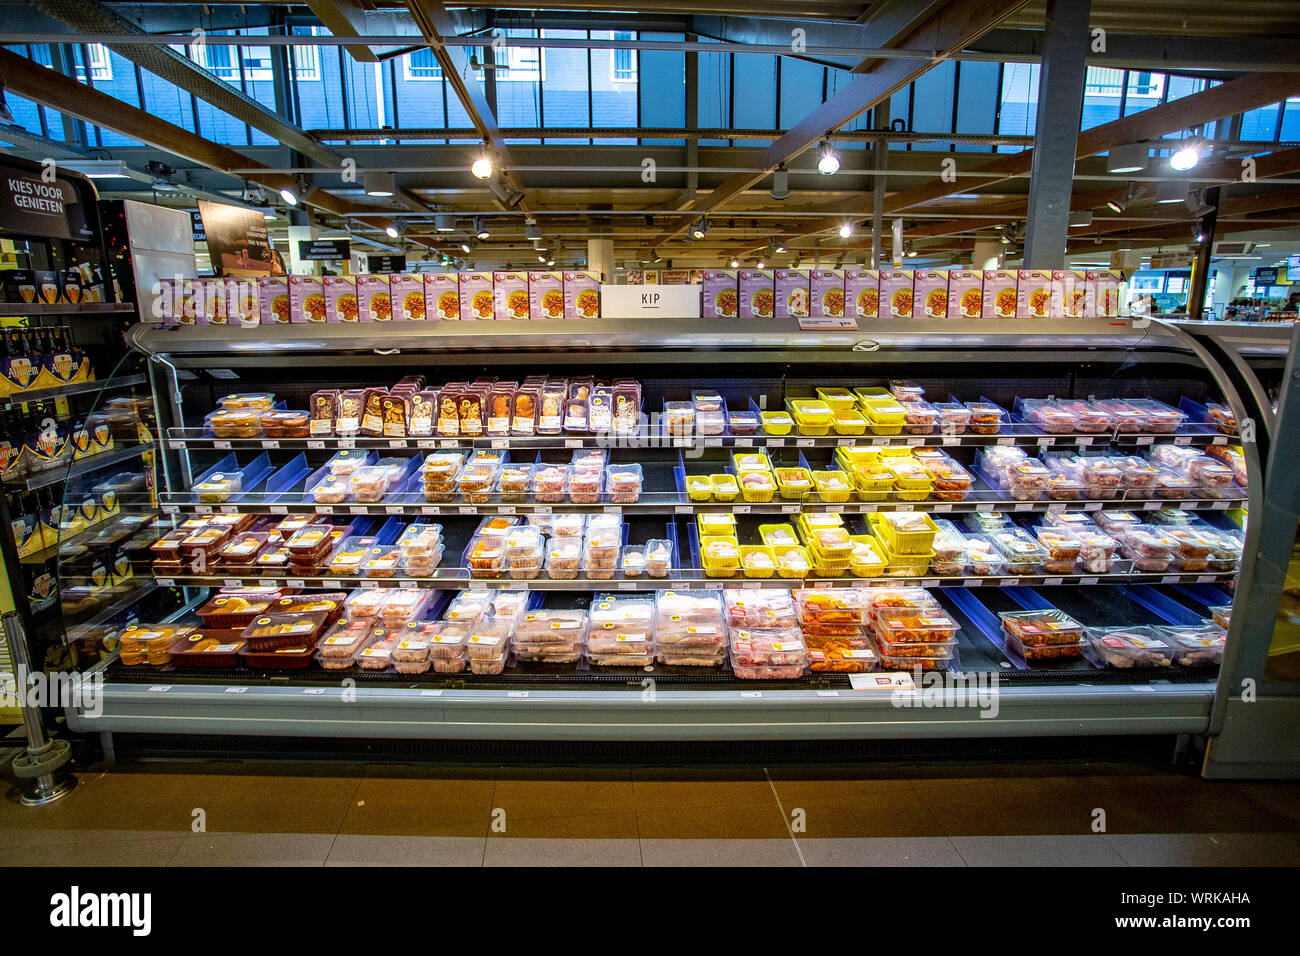 Photos at Jumbo Supermercado - Supermarket